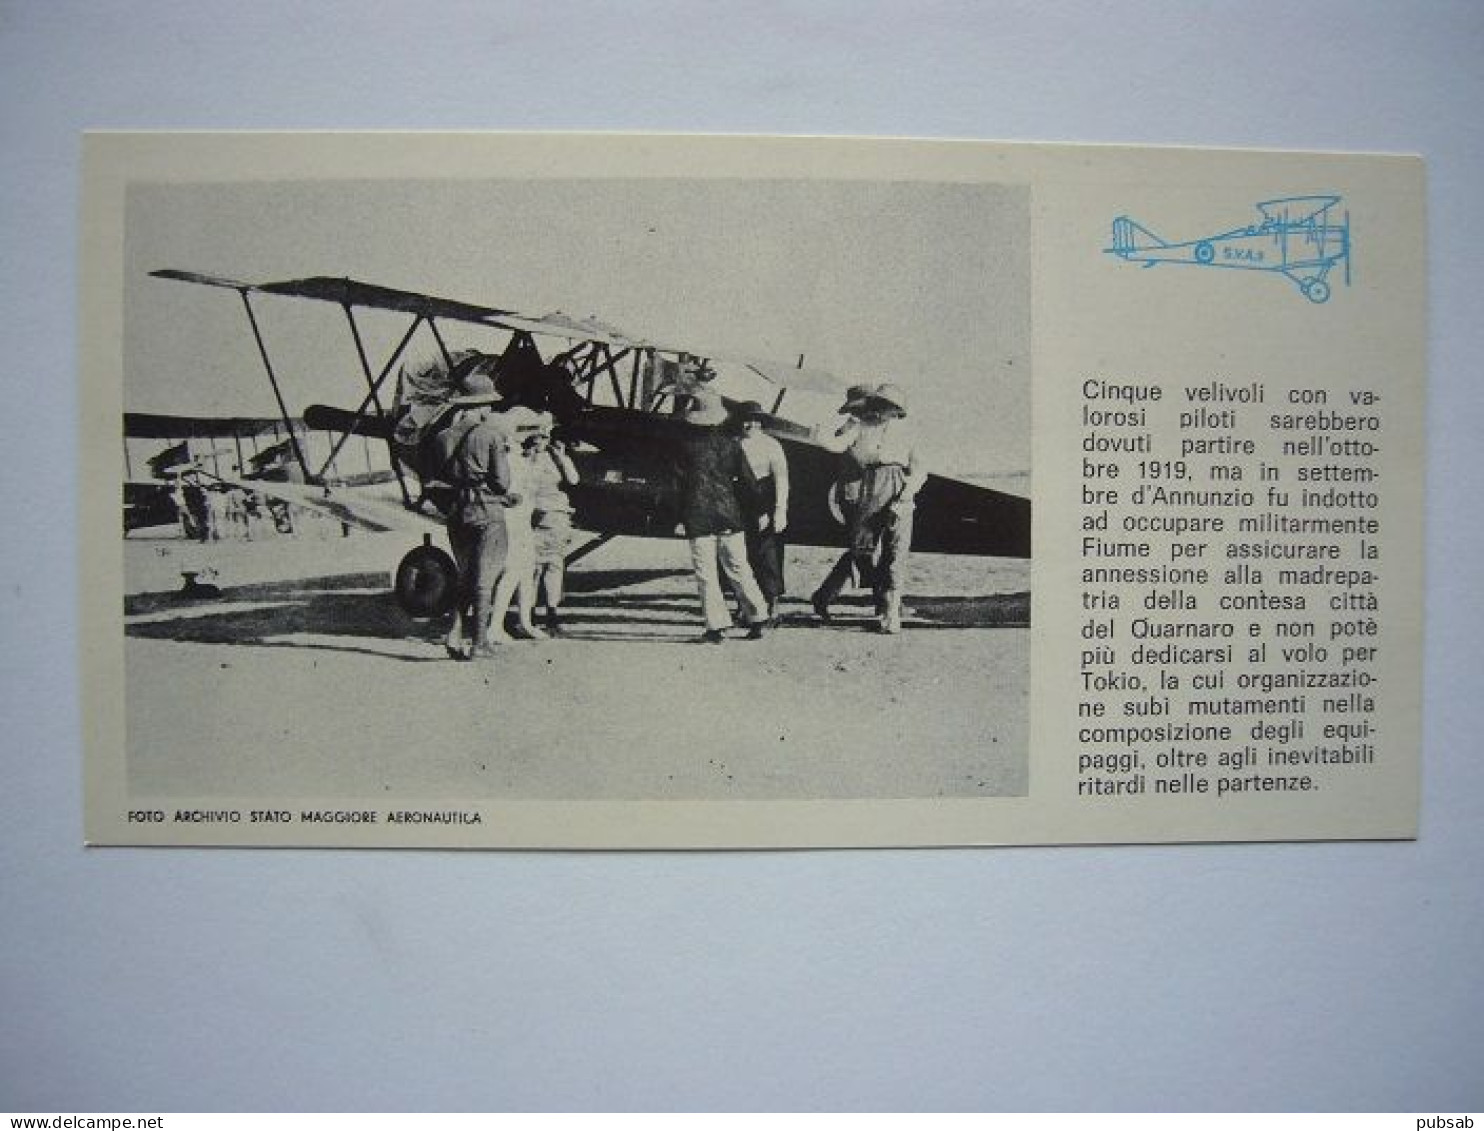 Avion / Airplane / RAID ROMA - TOKYO / Airplane SVA / Ferrarin Capannini And Masiero Moretto / Card And Cover - 1946-....: Era Moderna